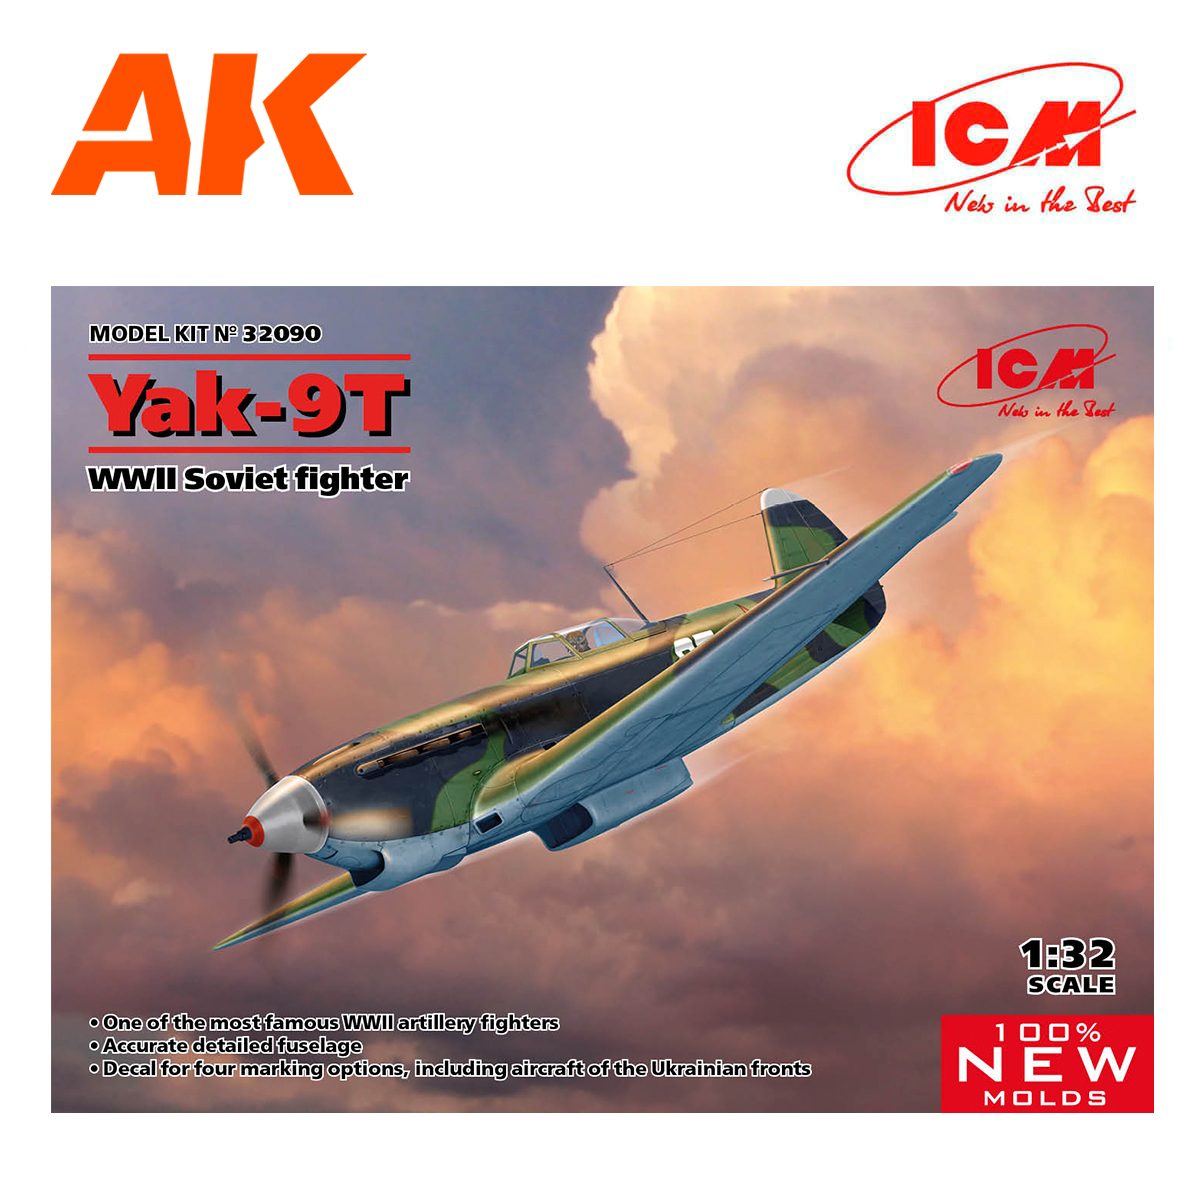 Yak-9T, WWII Soviet fighter (100% new molds) 1/32